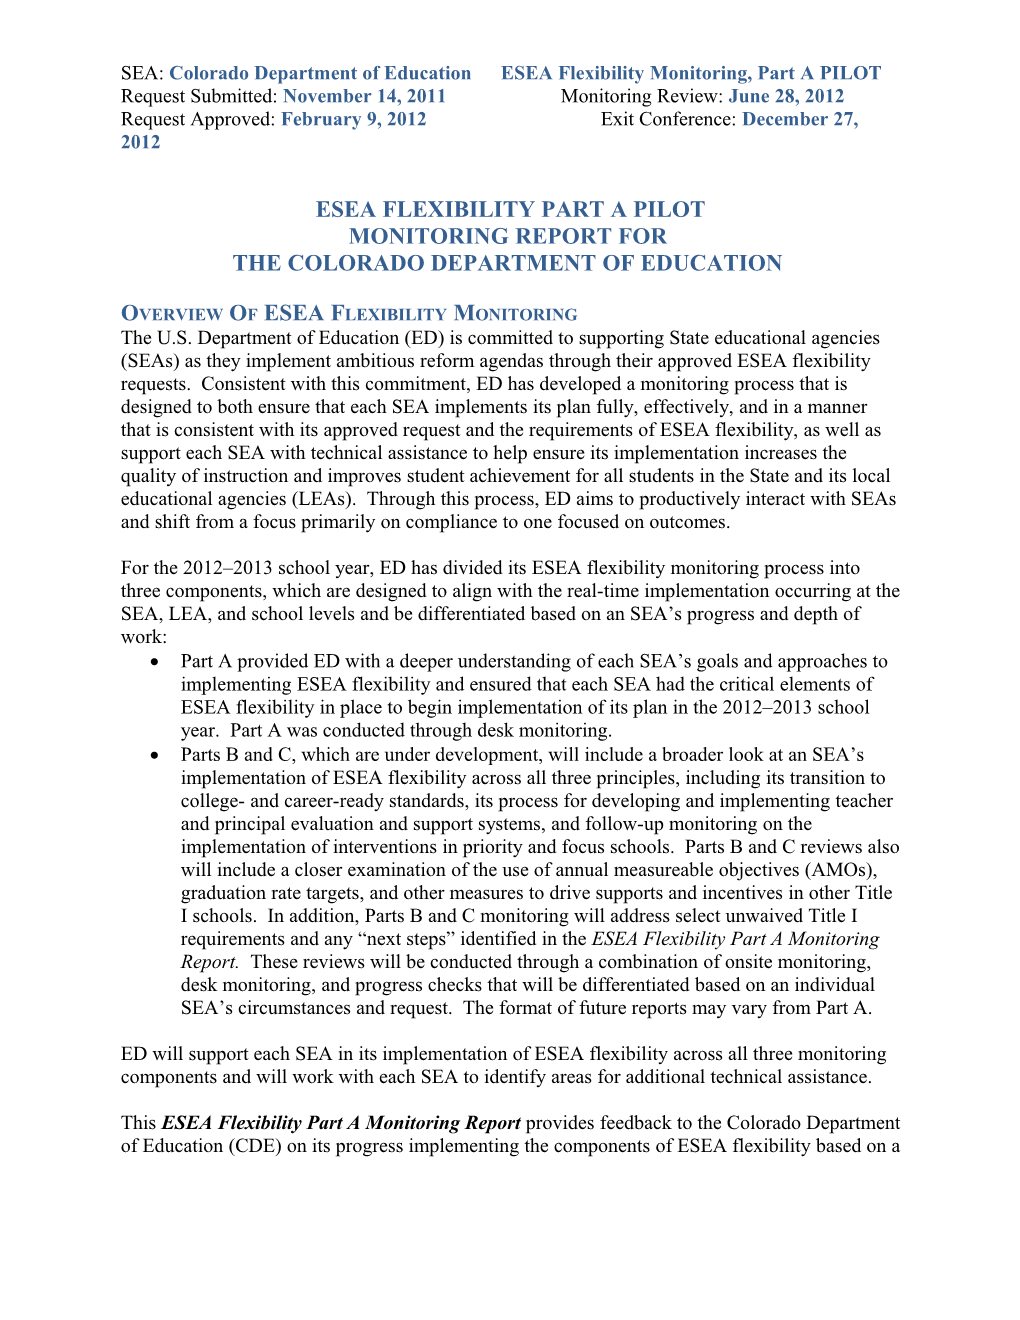 Colorado ESEA Flexibility Monitoring Part a Report